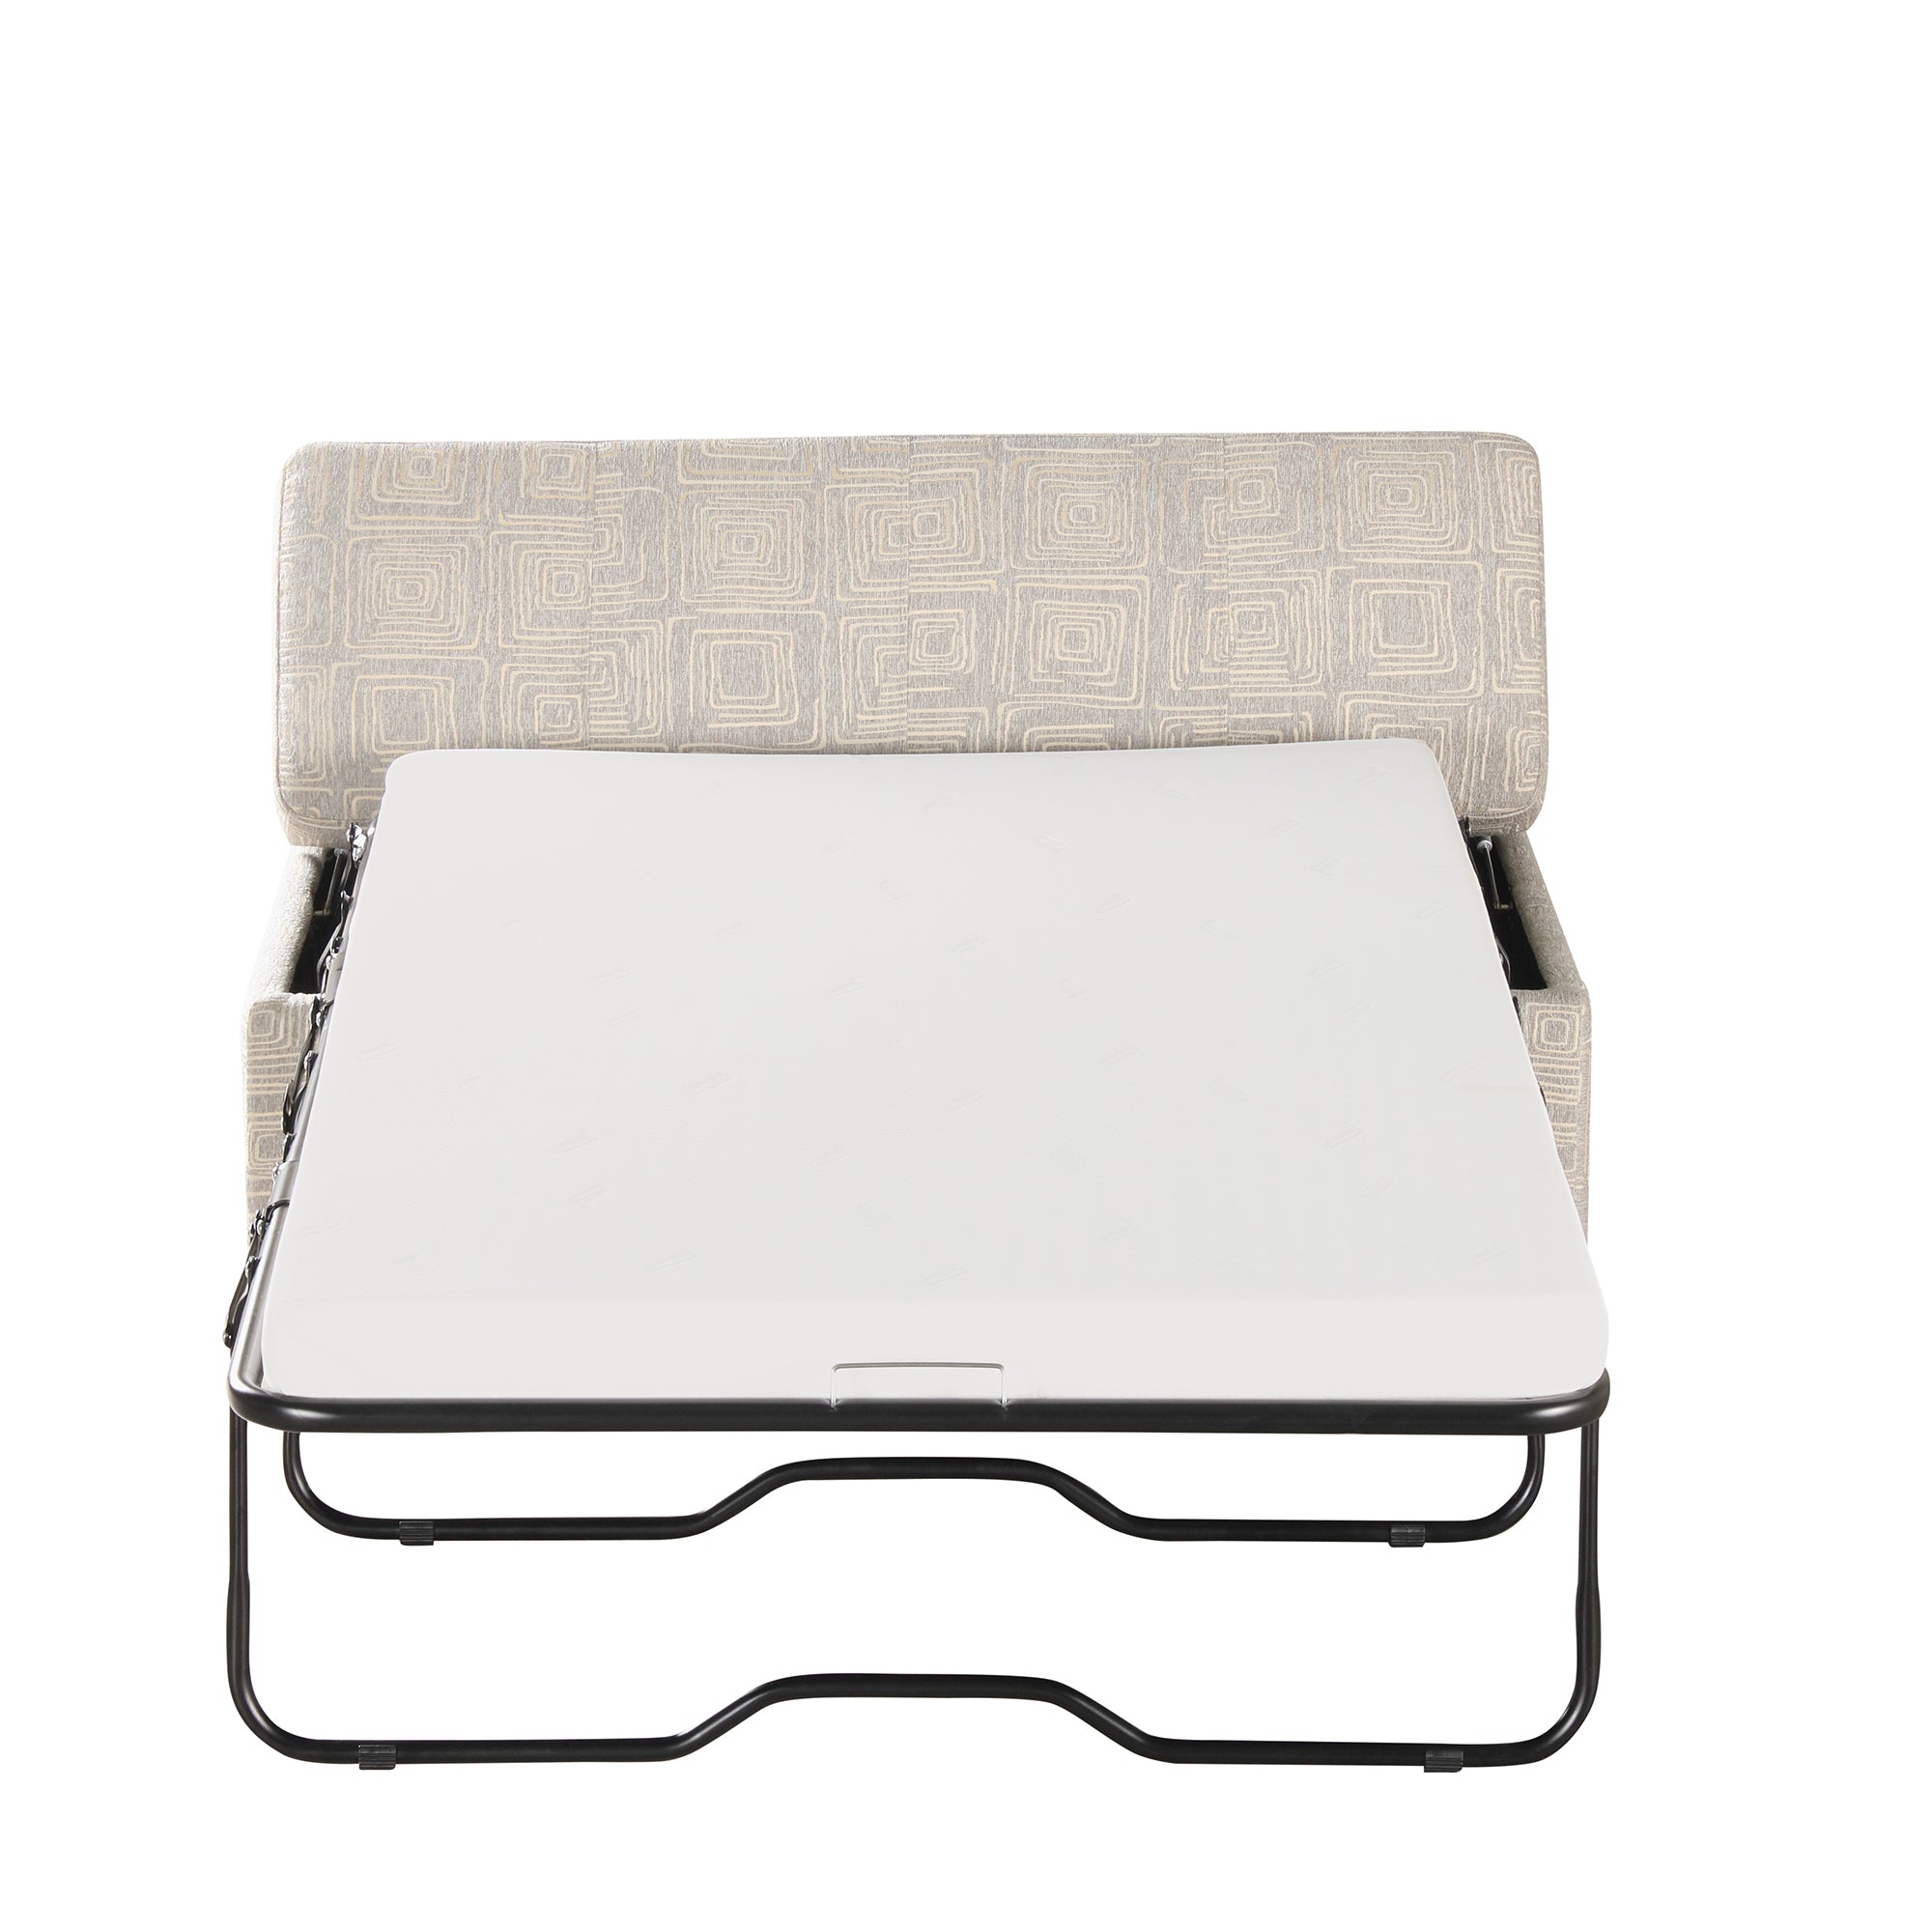 Twin Size Folding Ottoman Sleeper Bed with Mattress light gray-foam-linen-1 seat